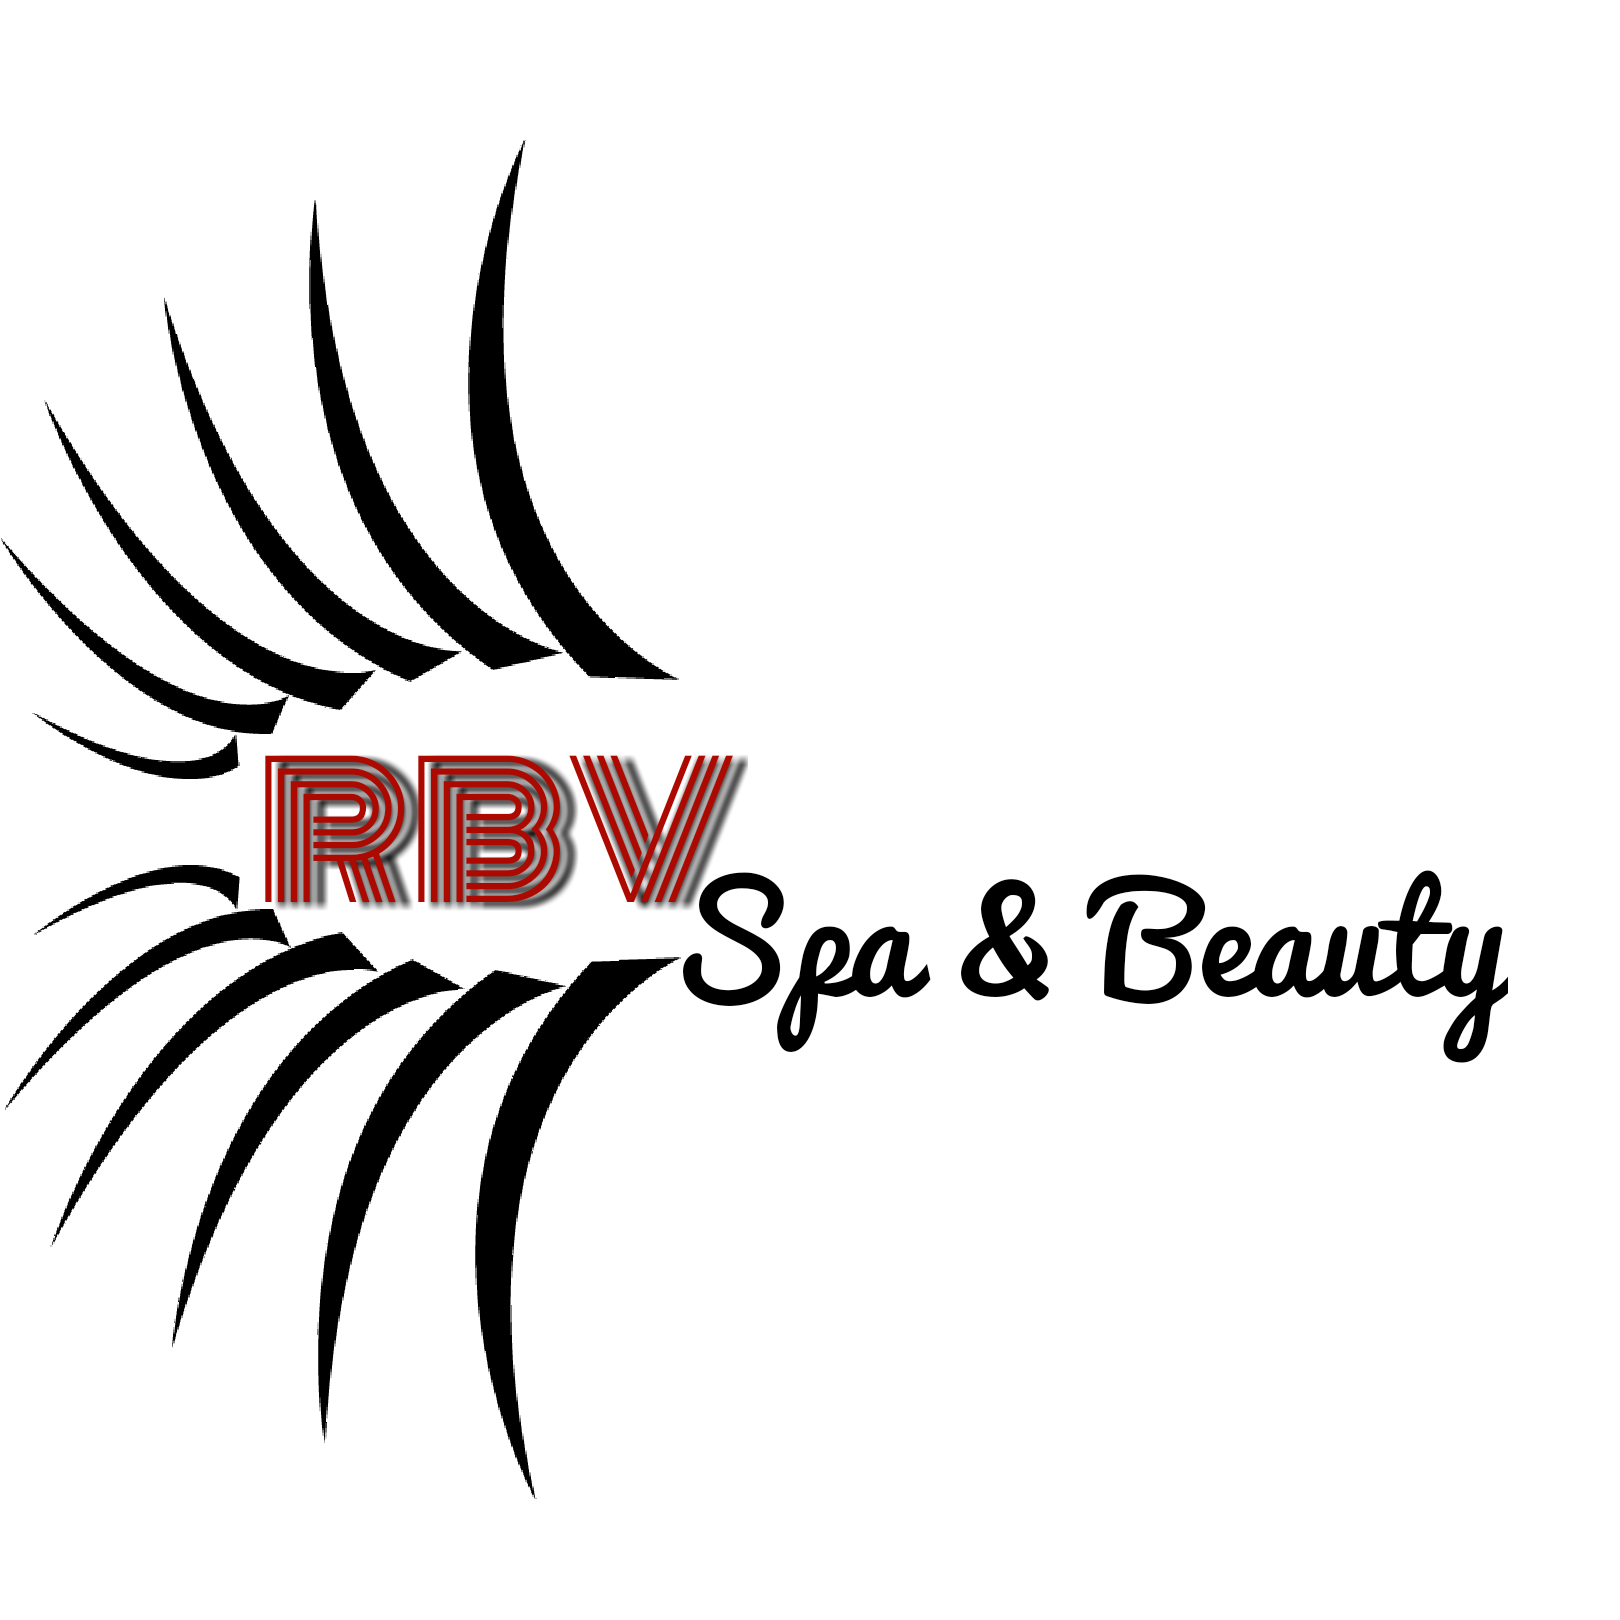 RBV spa & beauty